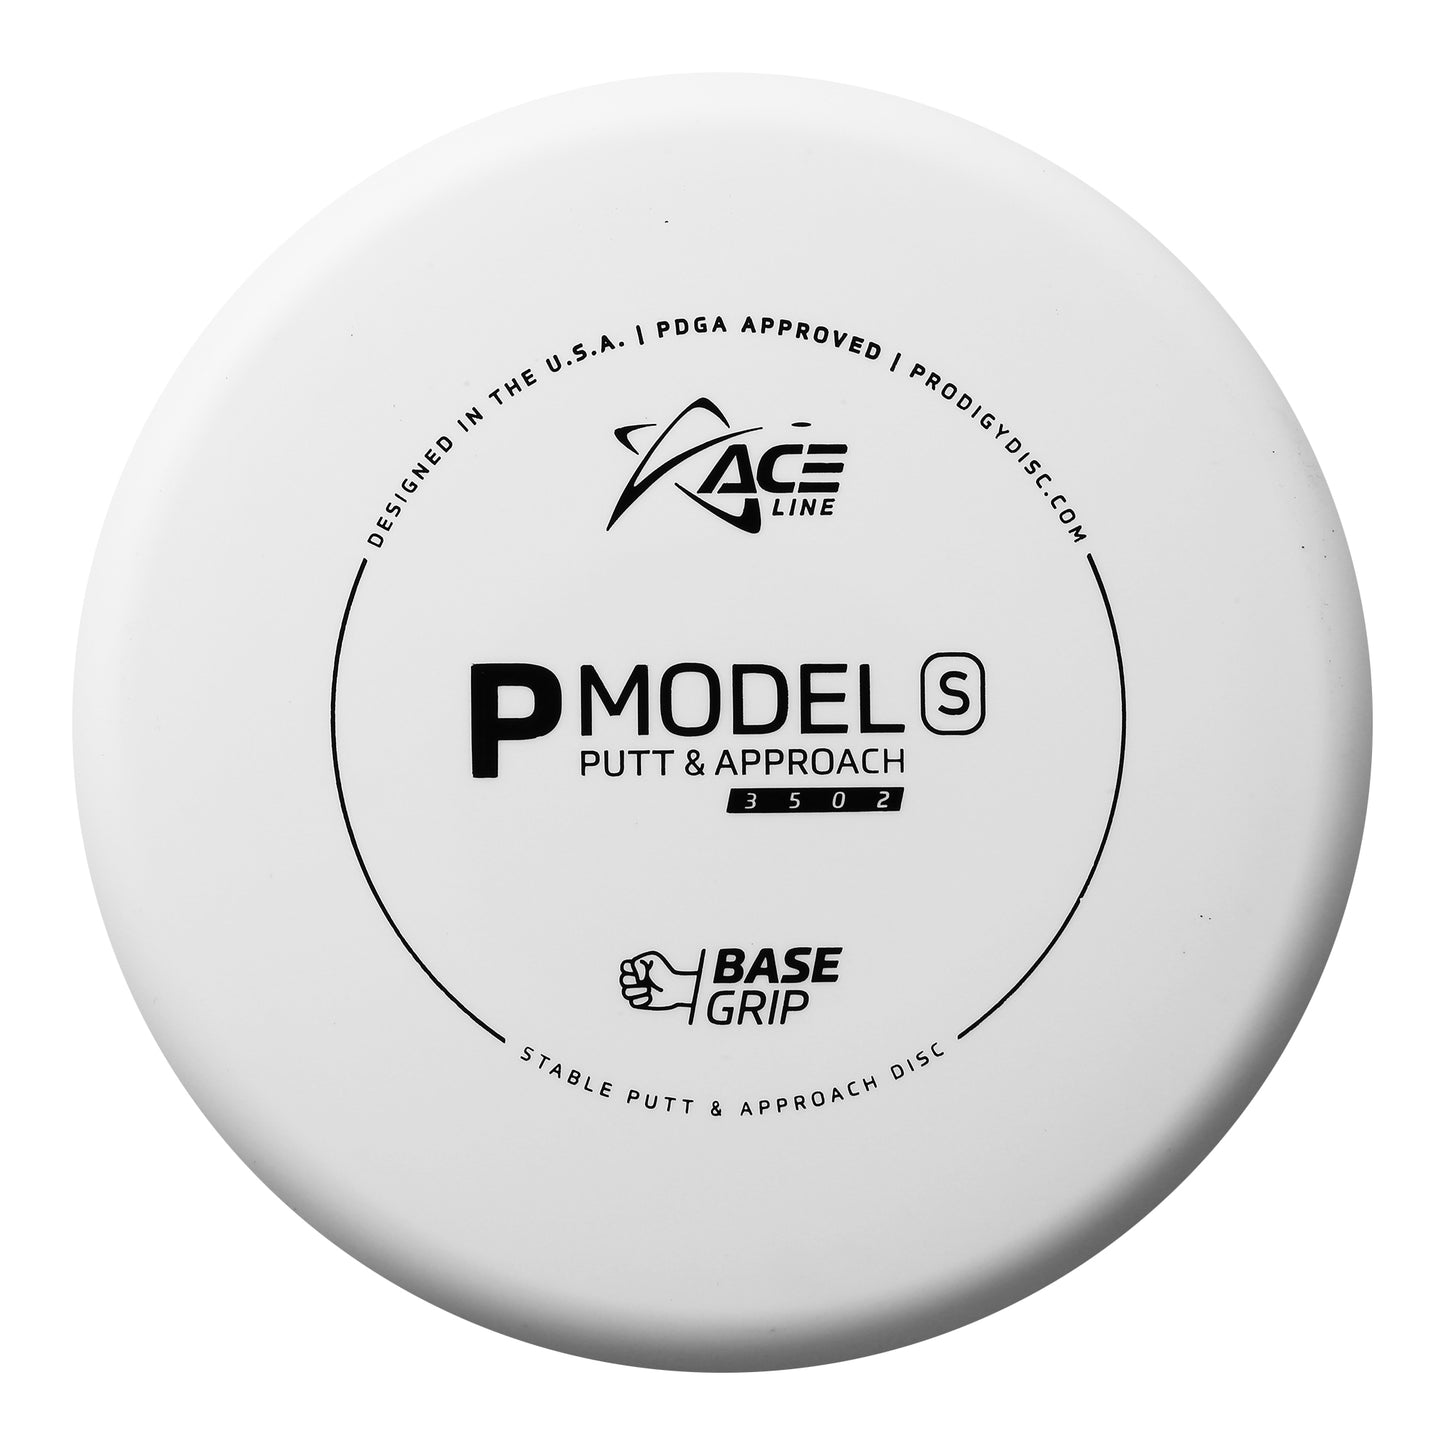 Prodigy Ace Line P Model S Putt & Approach Disc - Basegrip Plastic